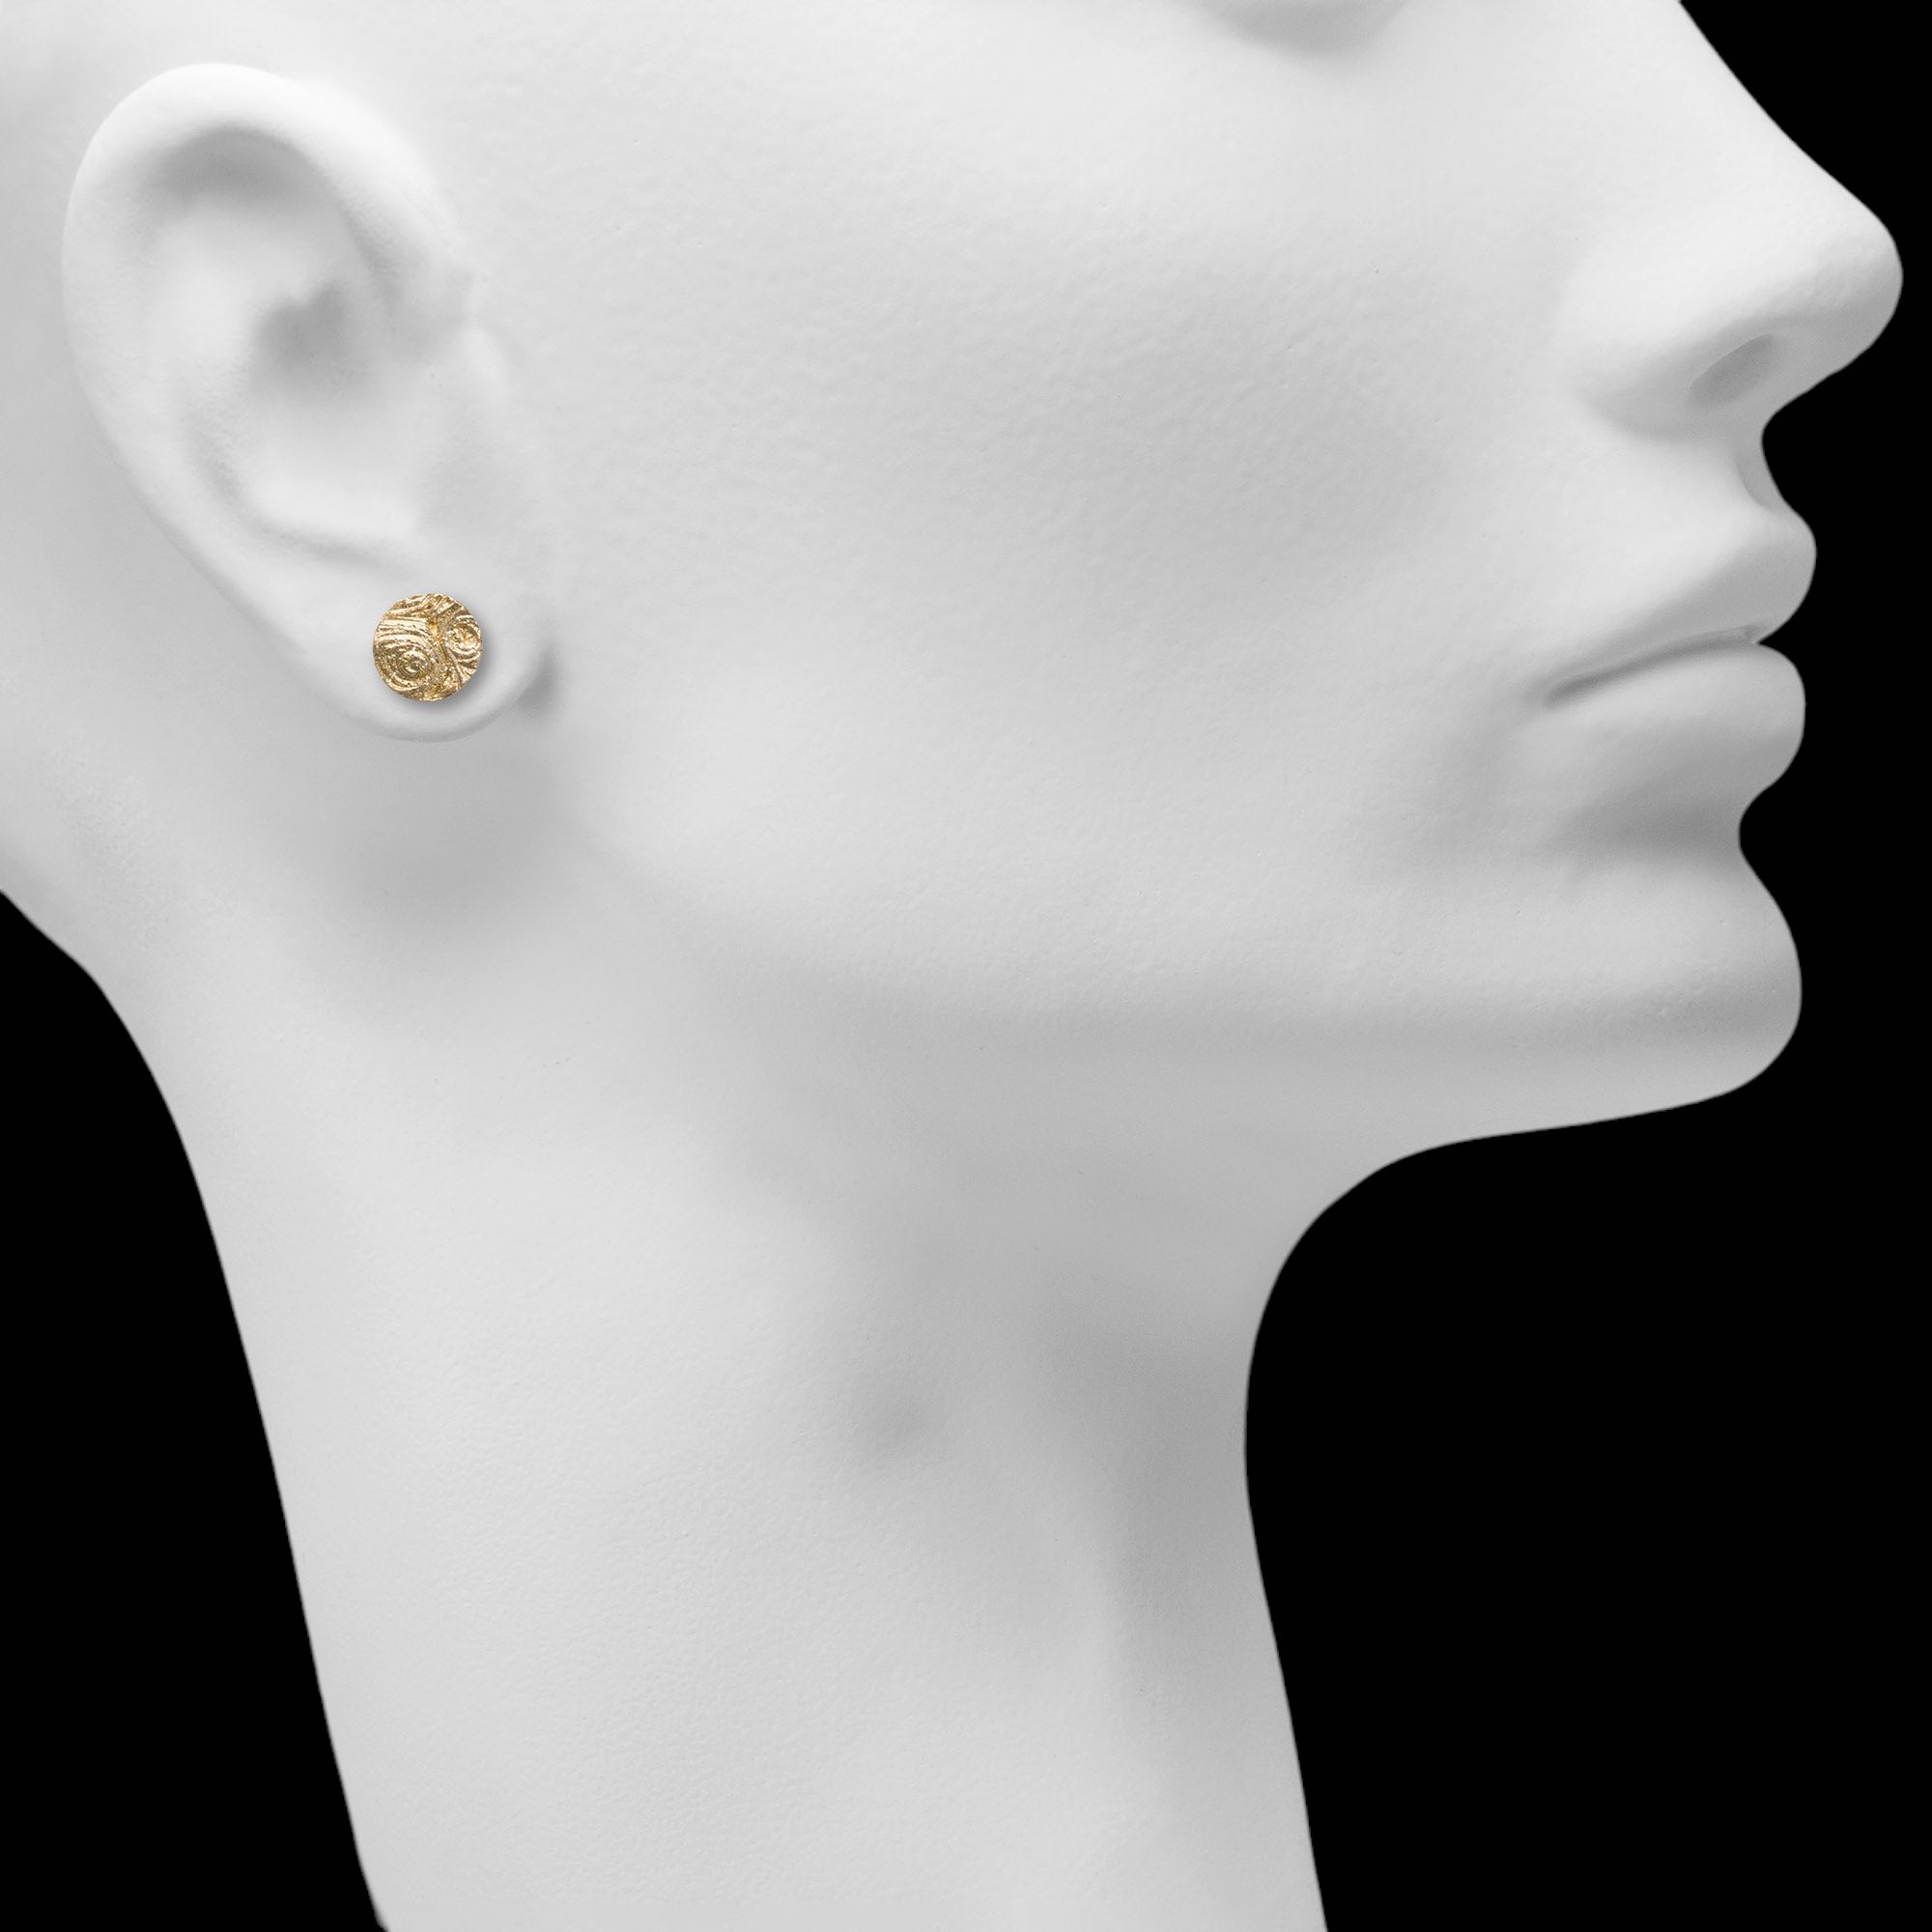 Round mini gilt-edged earrings